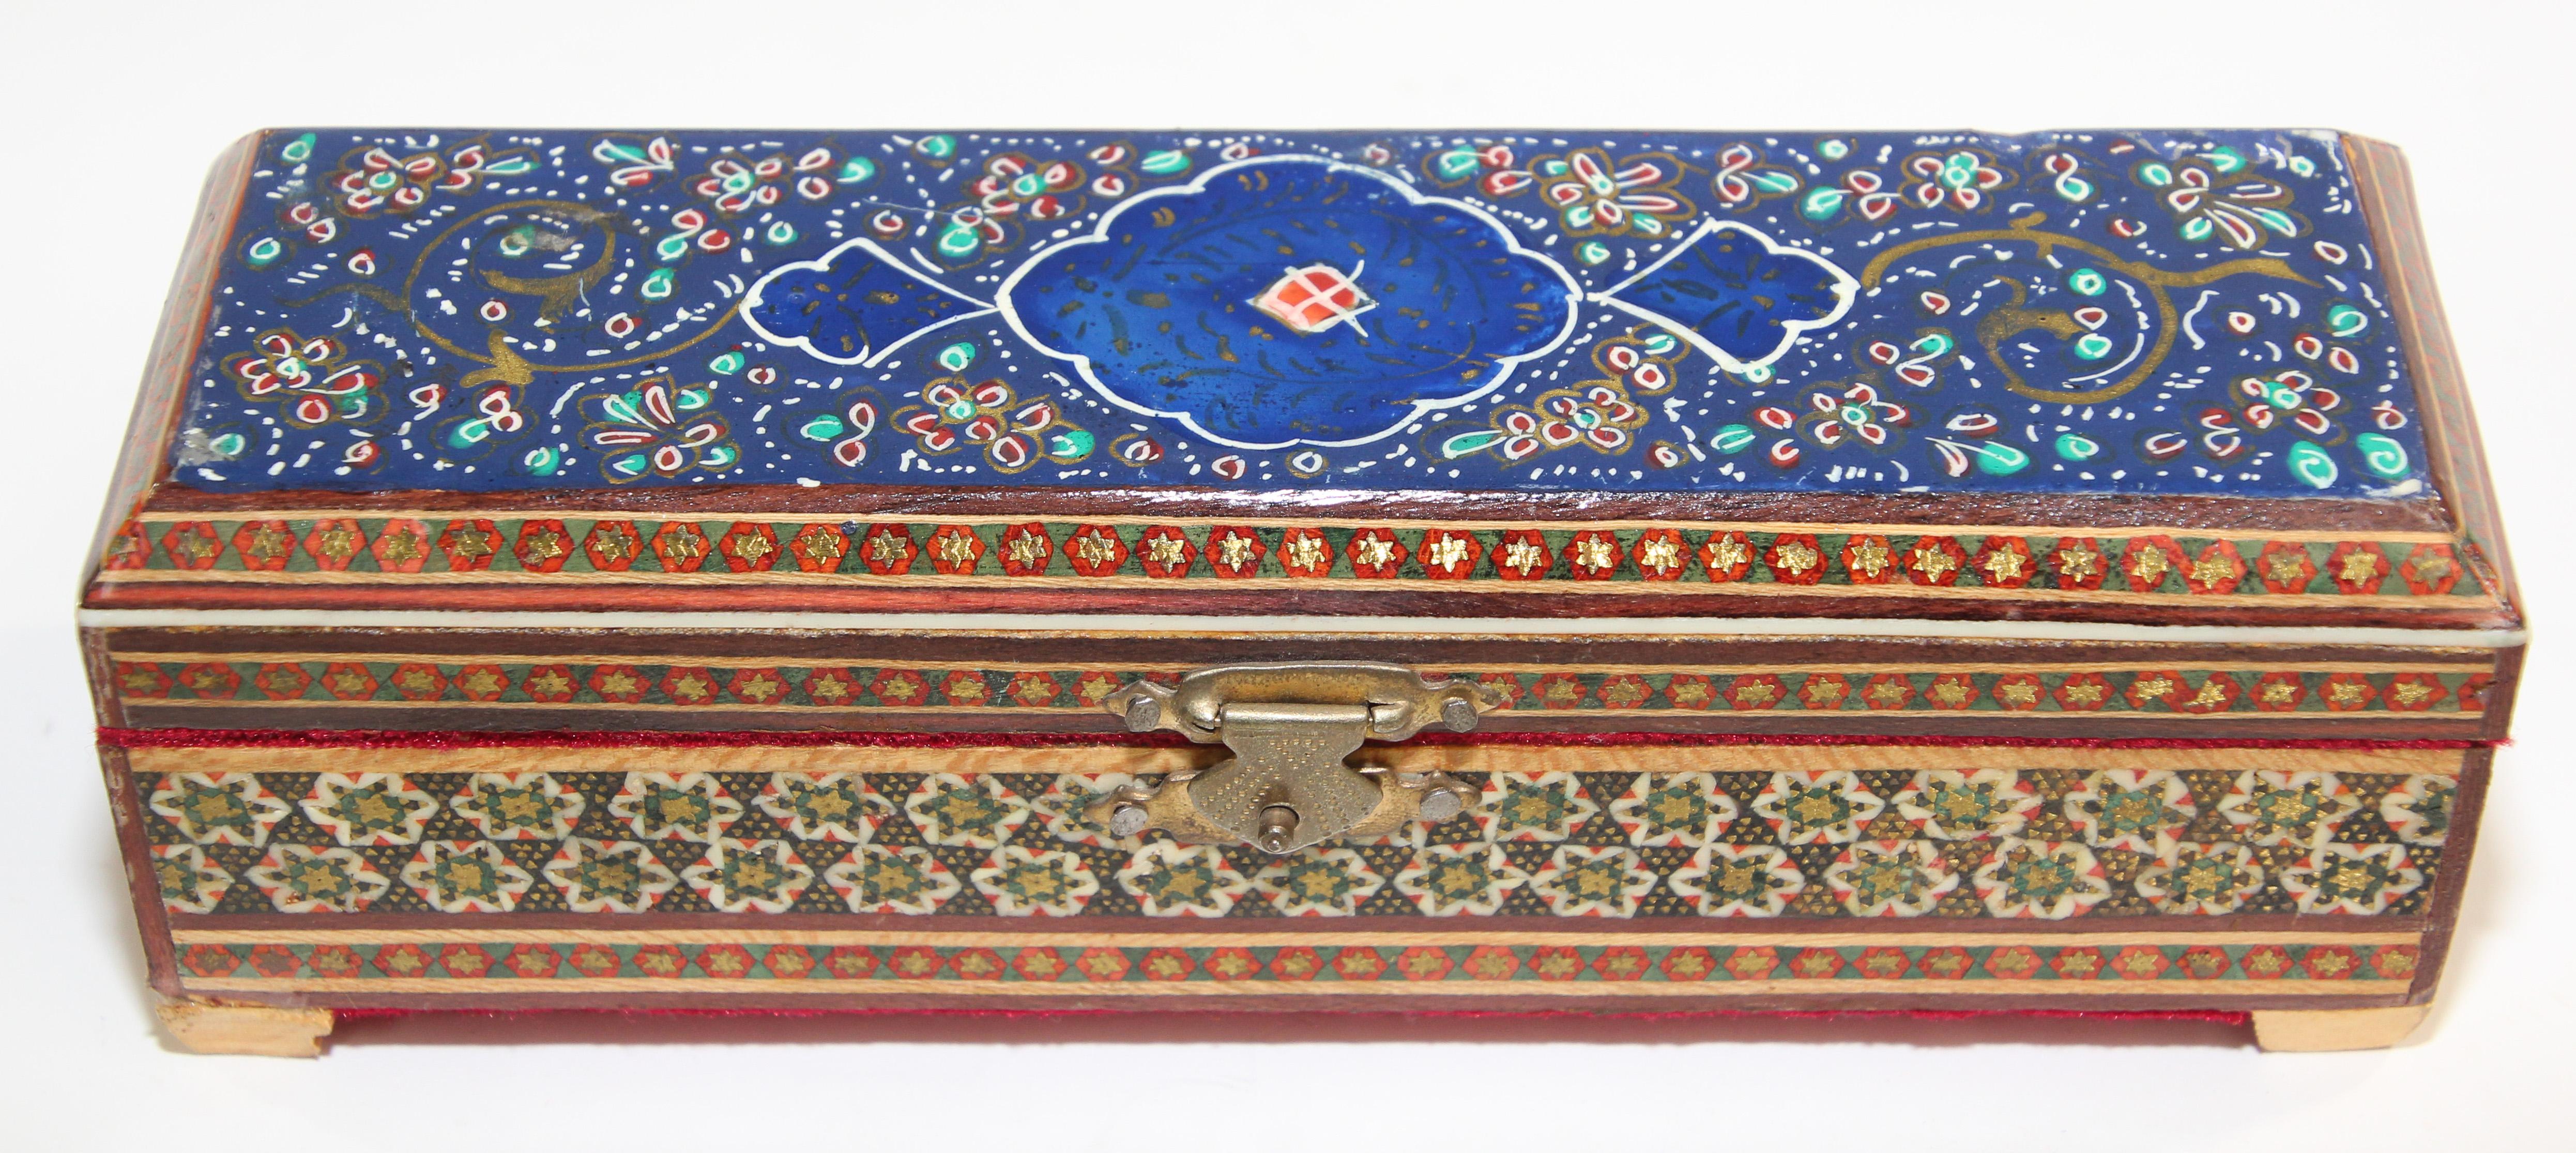 20th Century 1950s Middle Eastern Moorish Inlaid Jewelry Trinket Mosaic Box